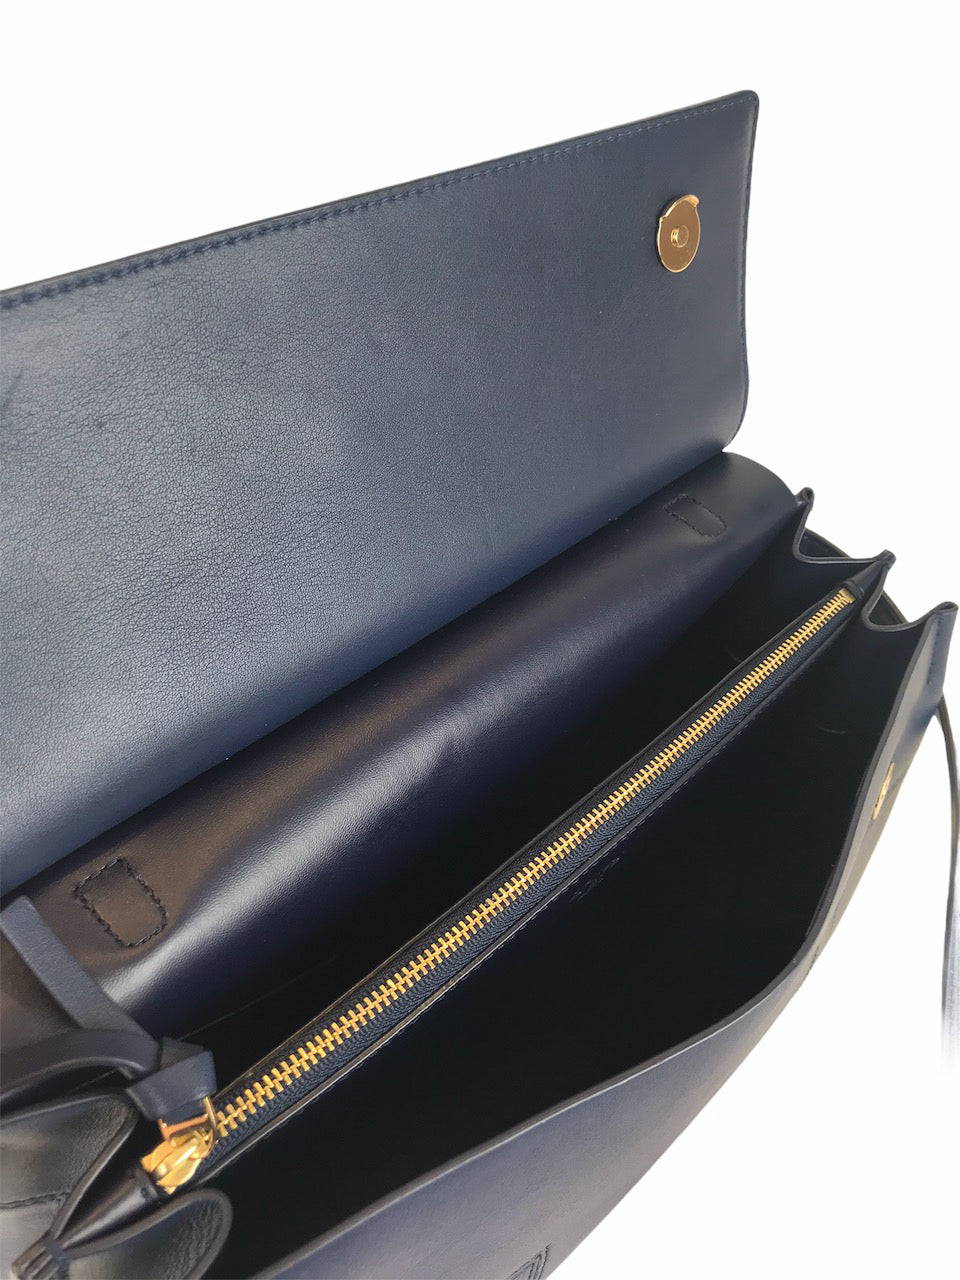 Tory Burch Navy Leather Shoulder Bag - As Seen On Instagram 09/09/2020 - Siopaella Designer Exchange